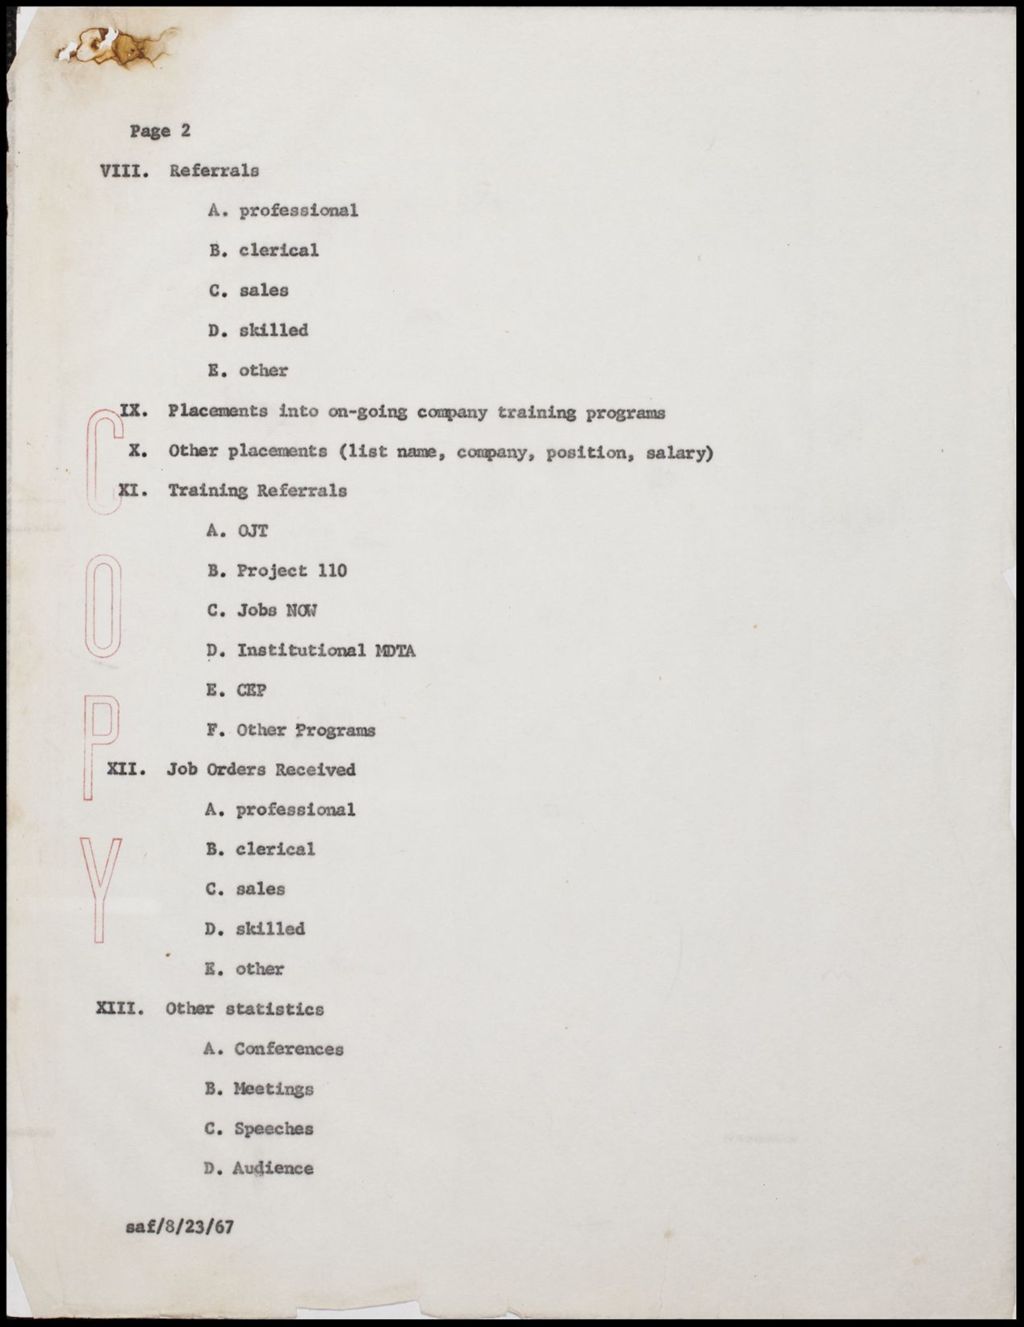 Miniature of Reports, 1968 (Folder II-137)